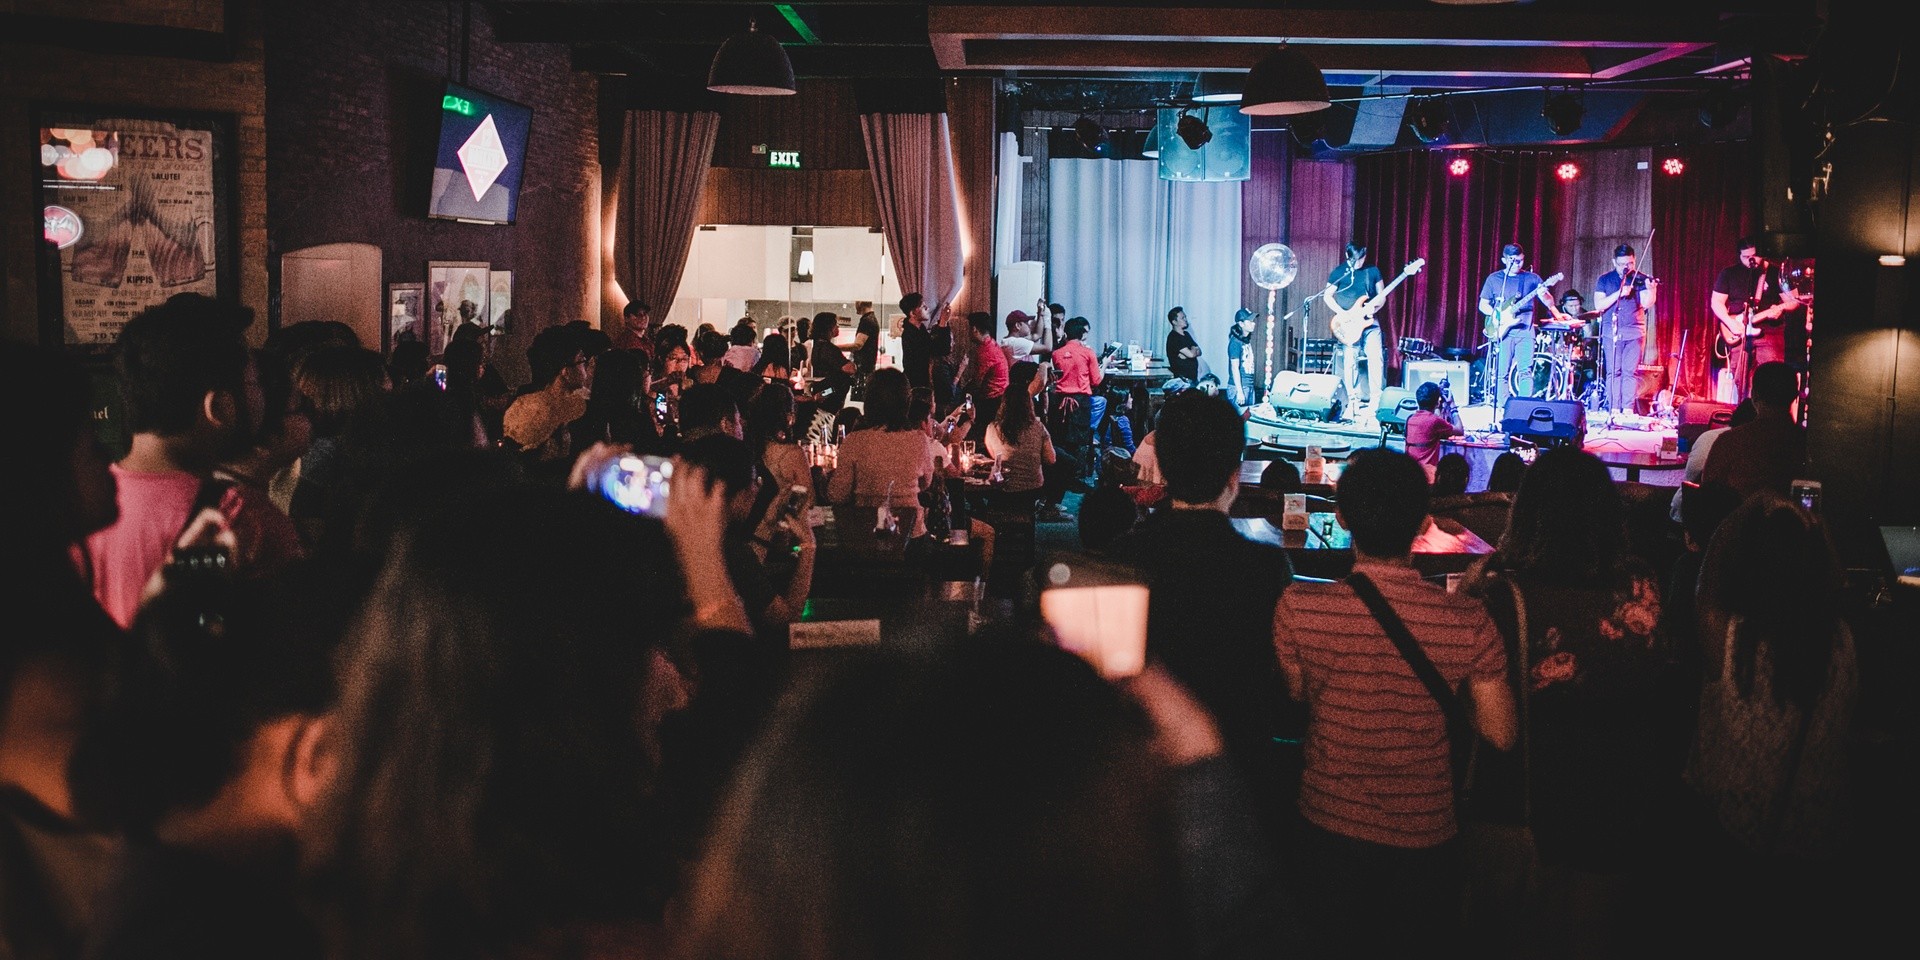 Live music venues in Manila shut their doors in Luzon "lockdown"